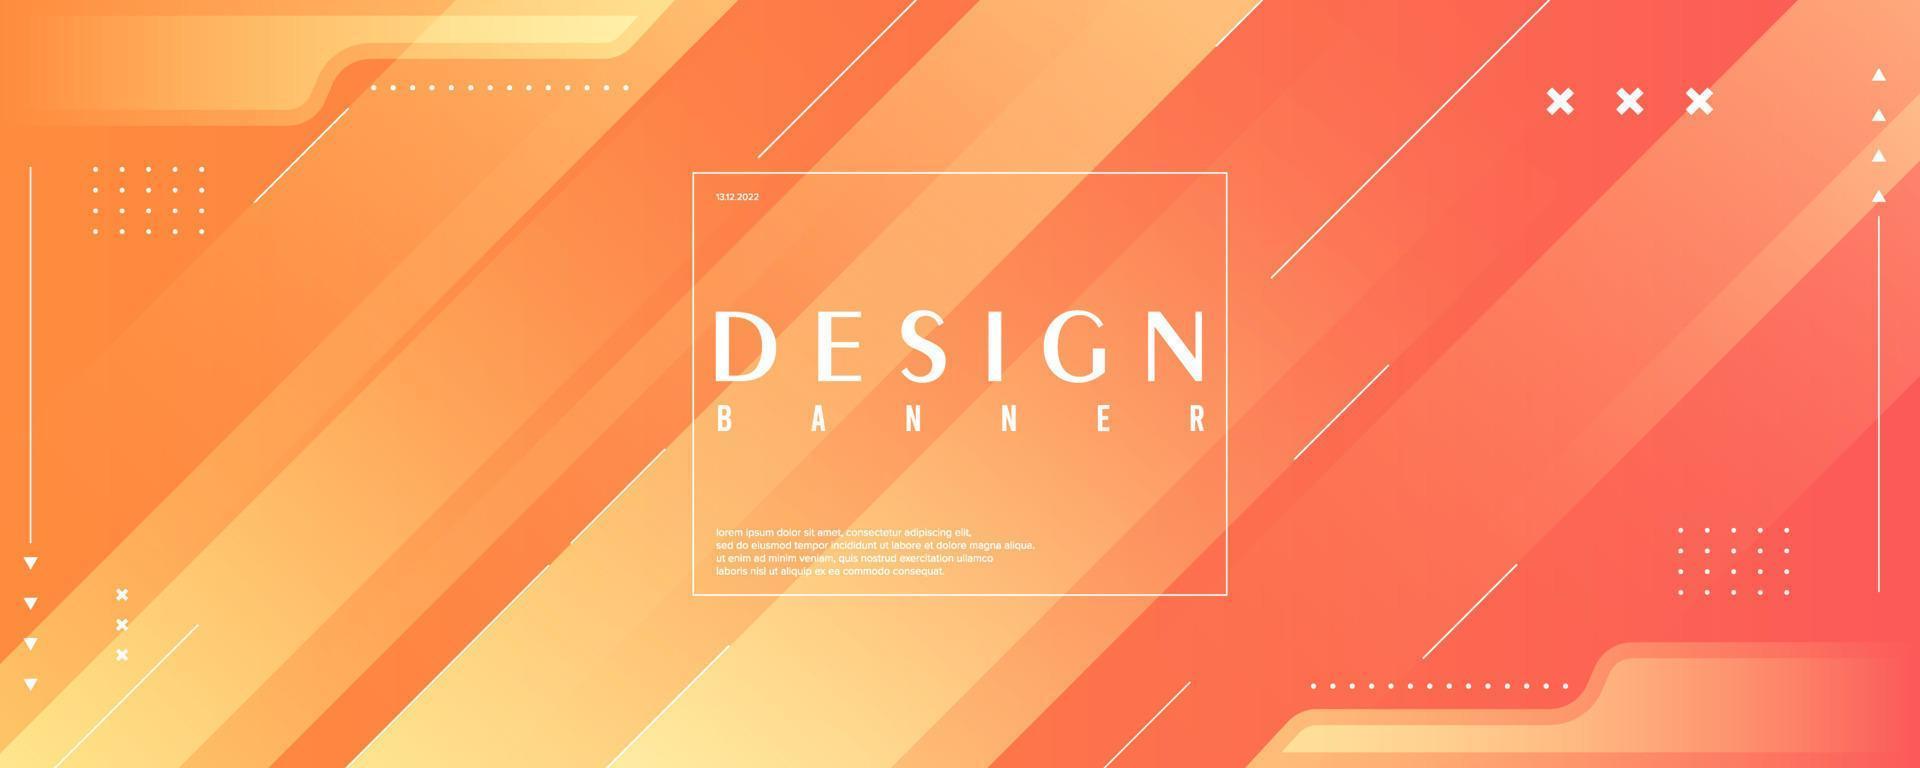 Banner orange background with gradient slashes vector